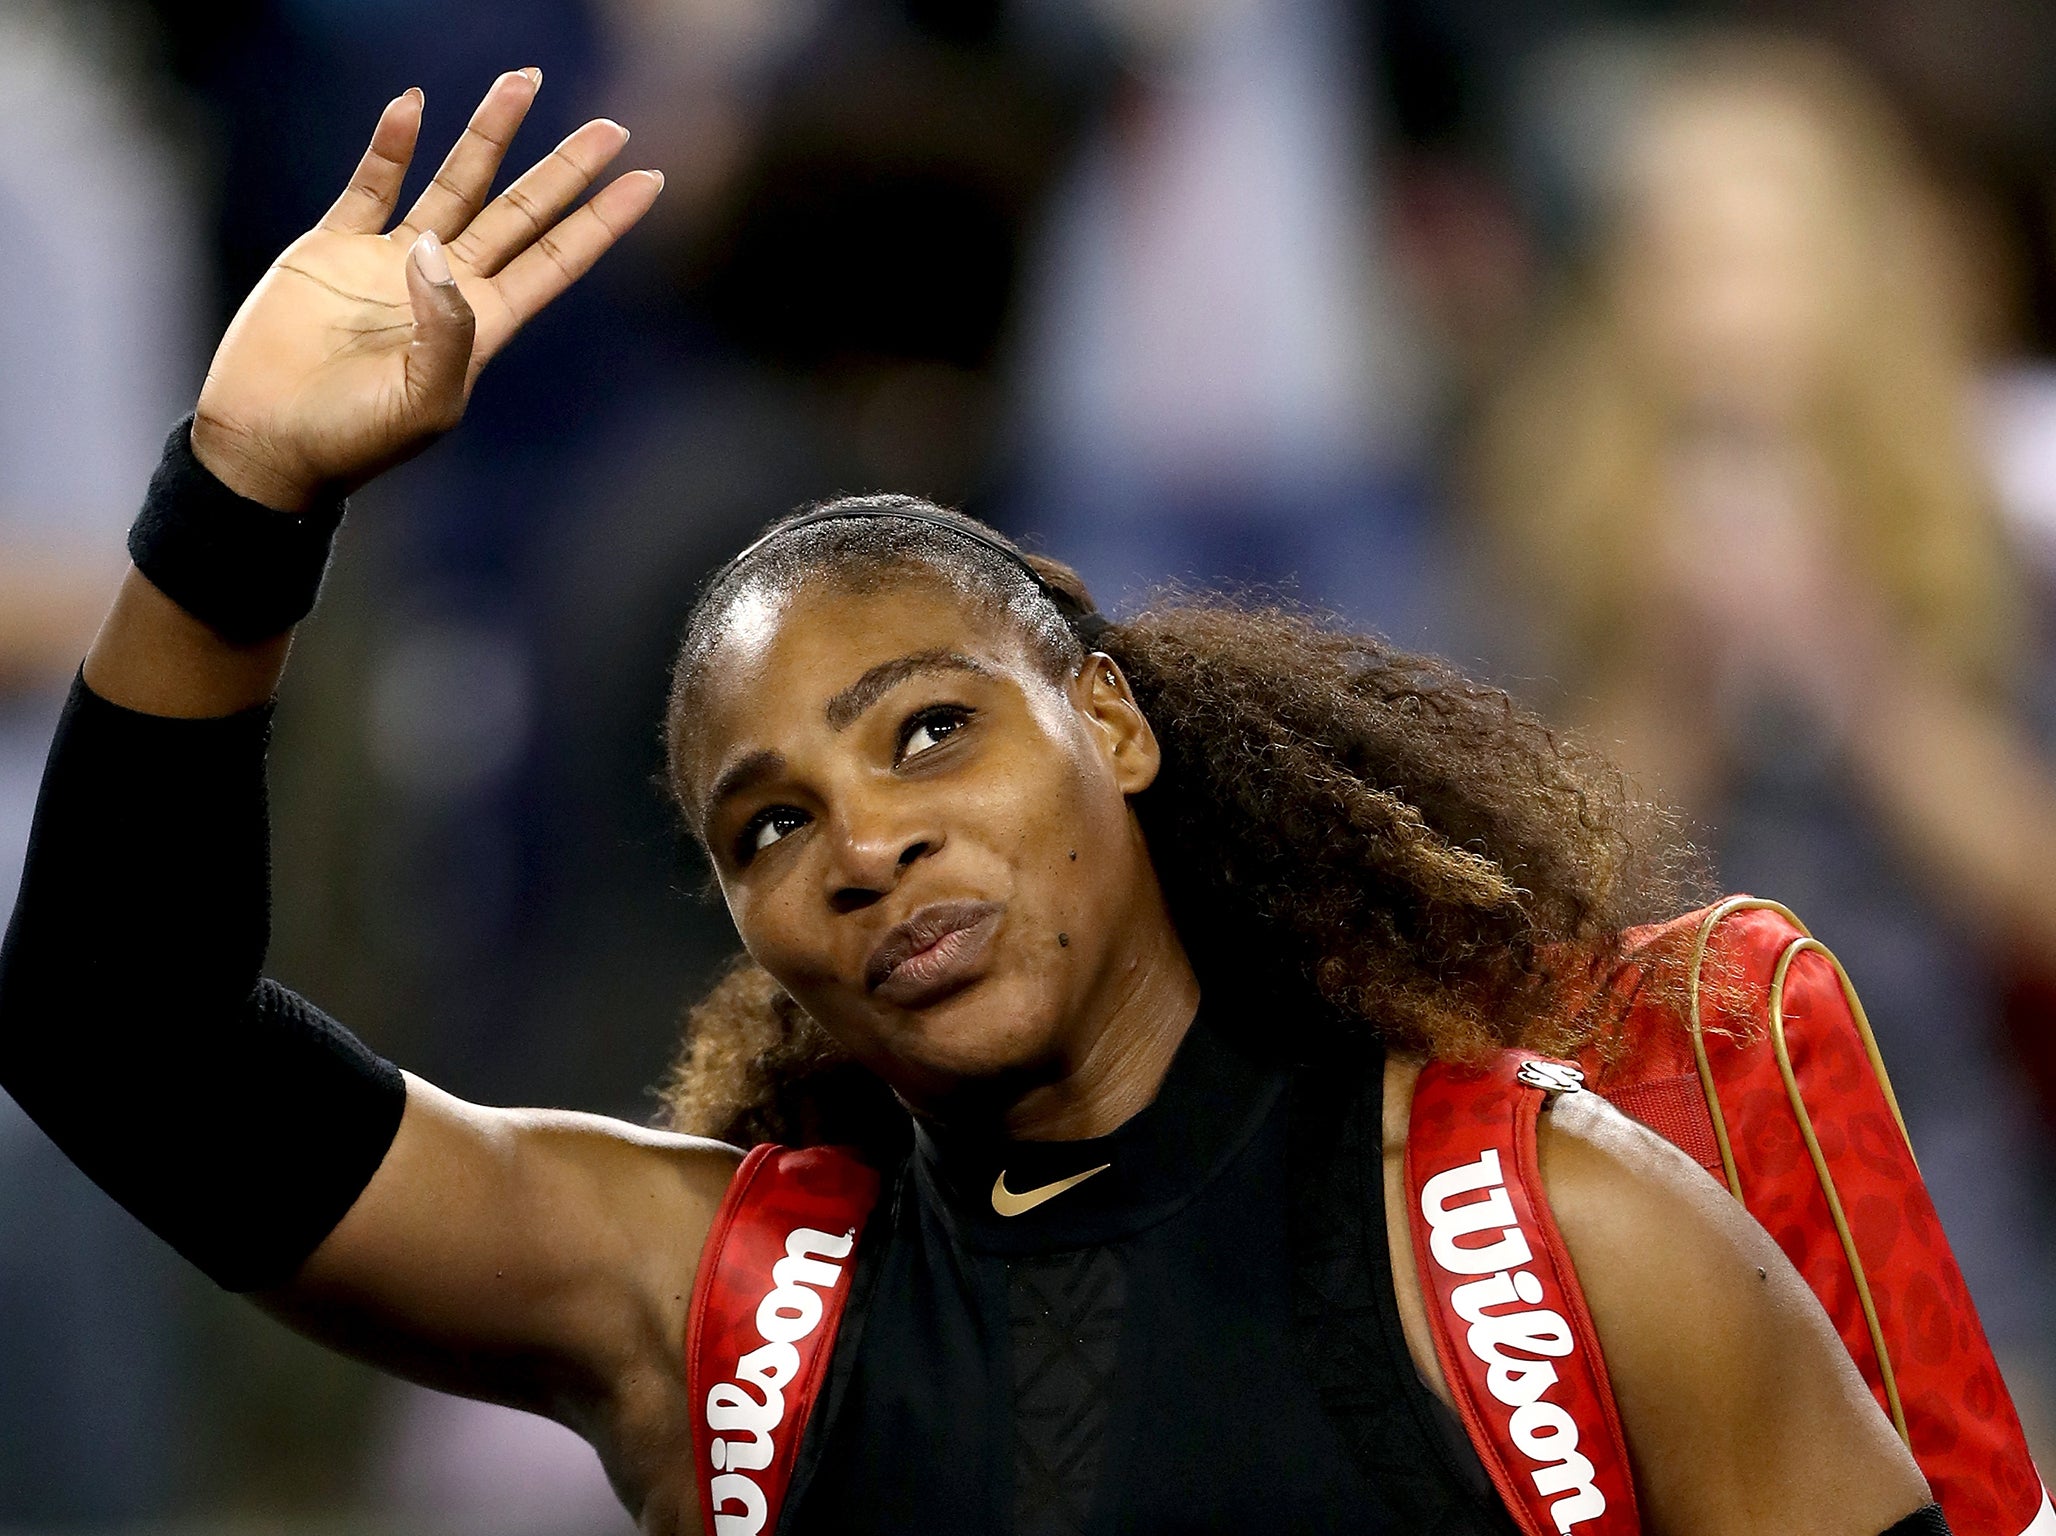 Serena Williams is through to the next round